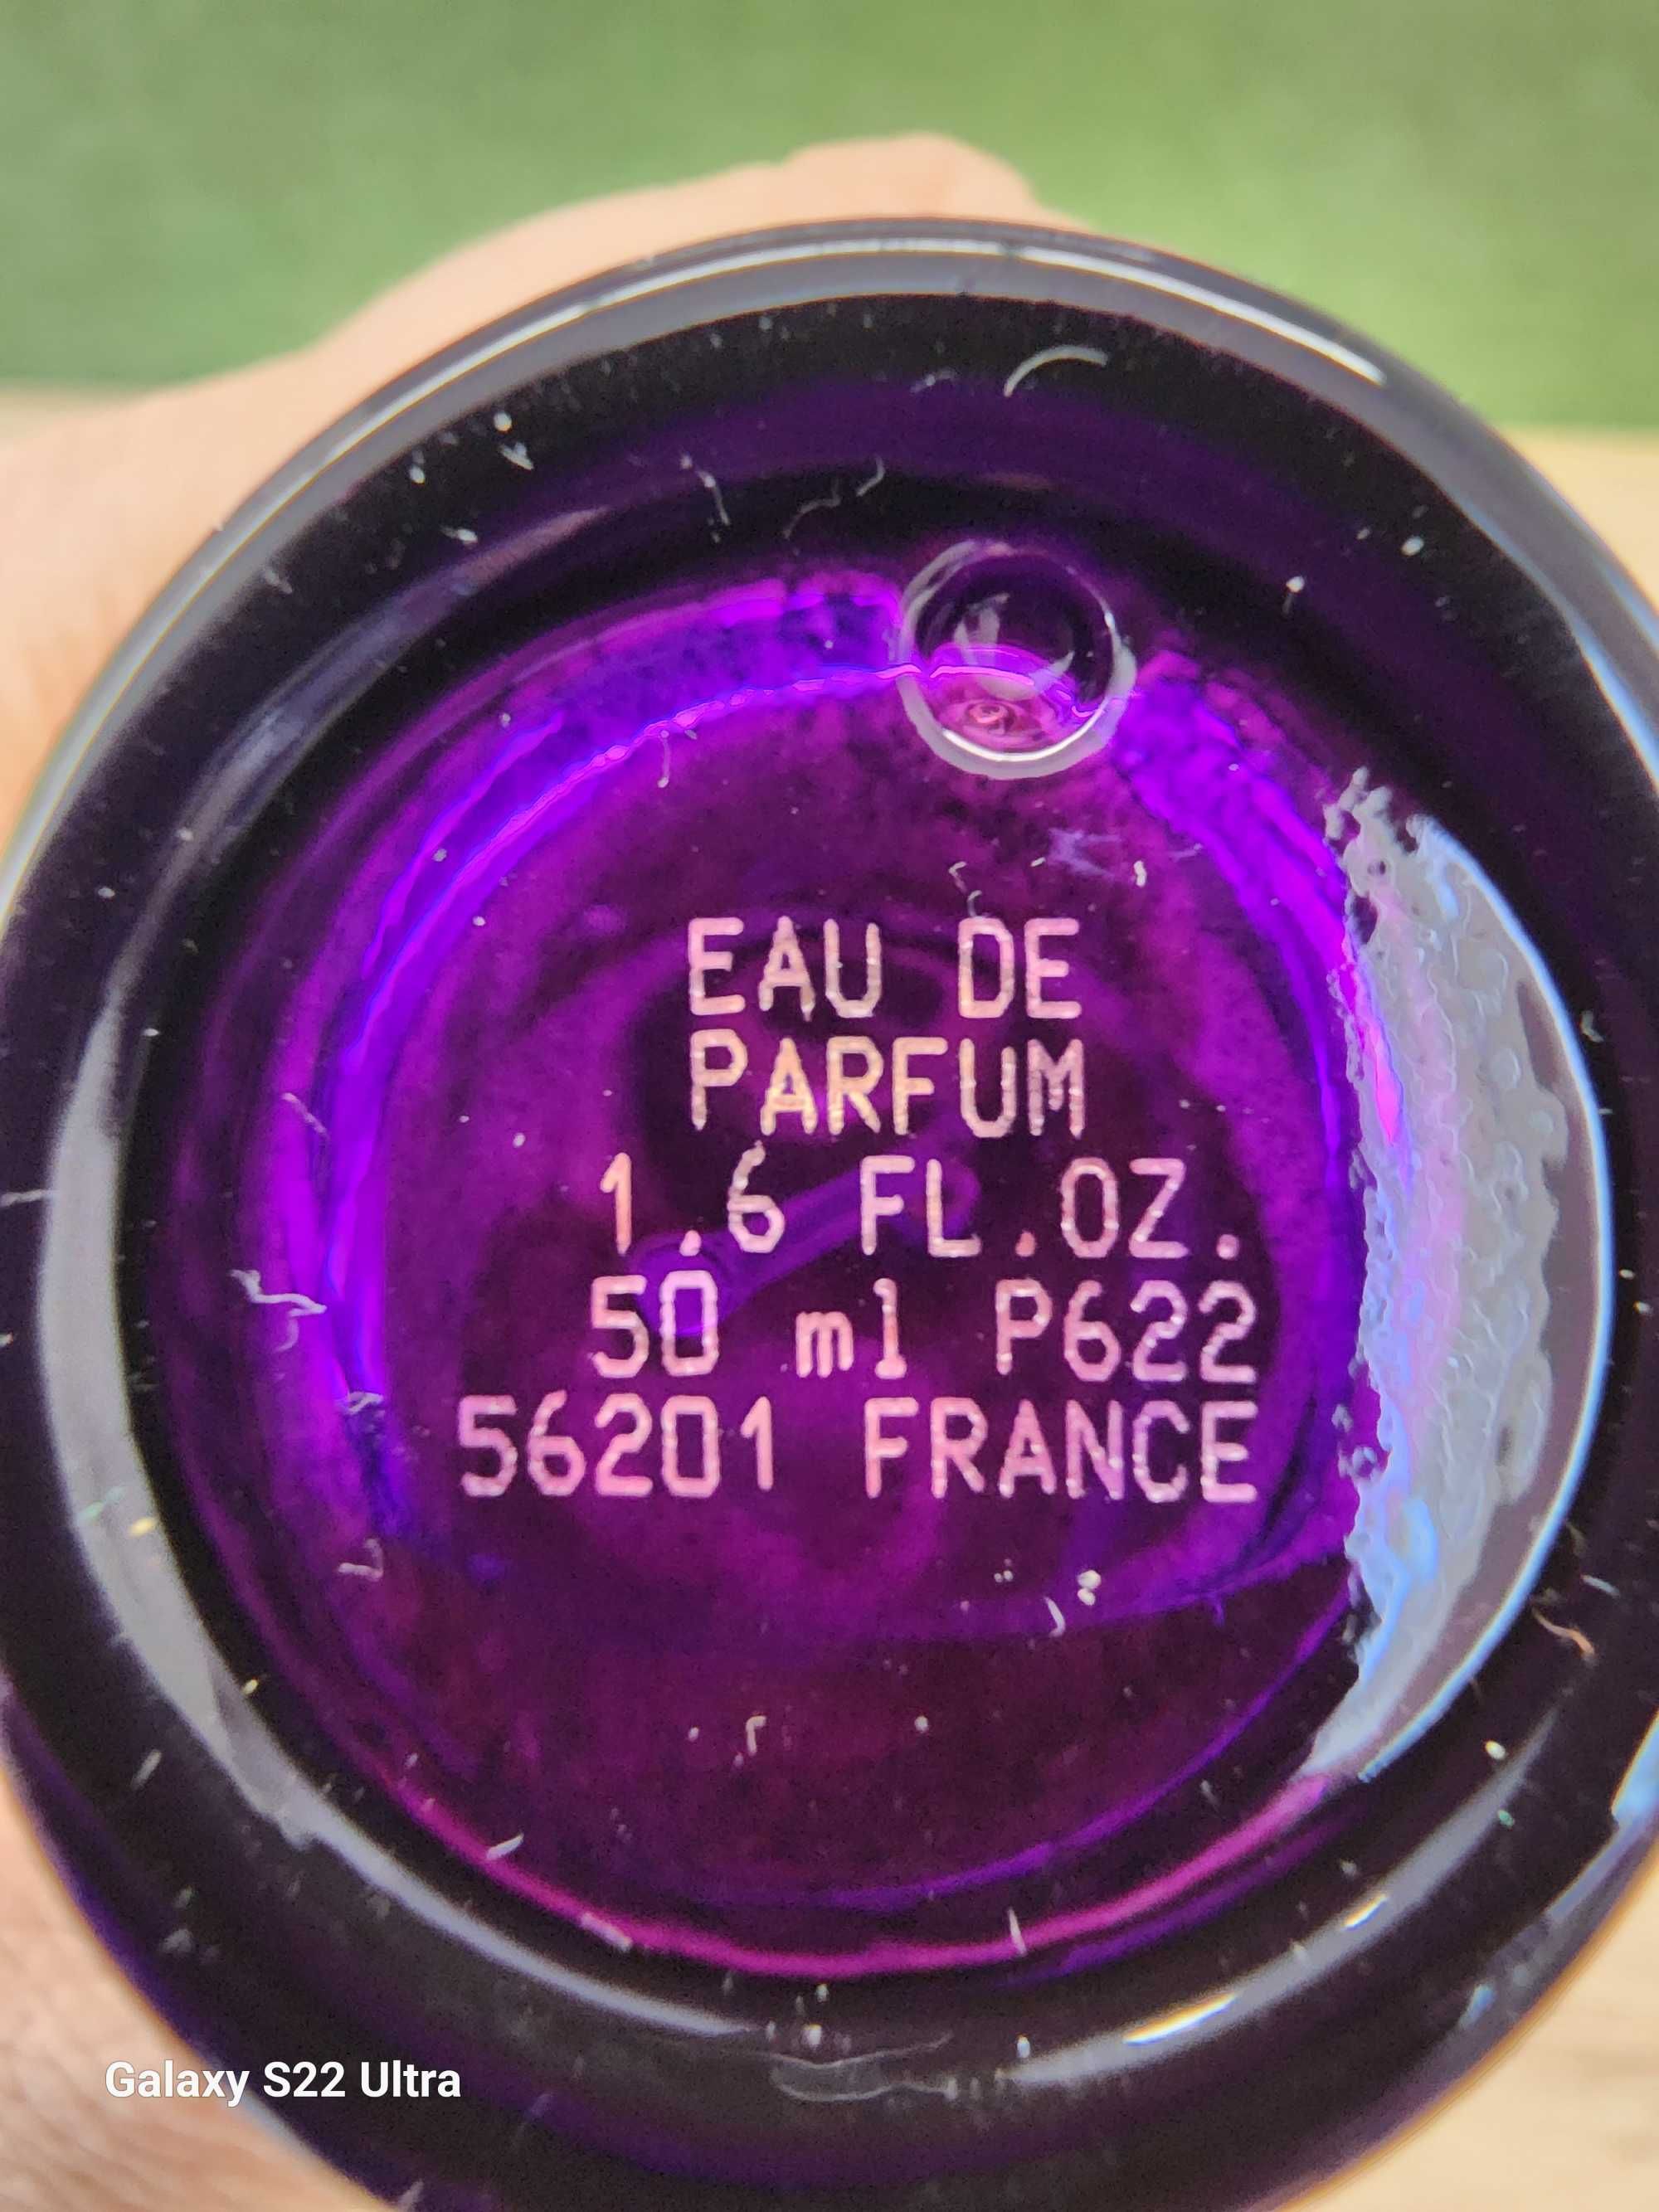 ОРИГИНАЛ парфюм Yves Rocher So Elixir Purple 50 ml